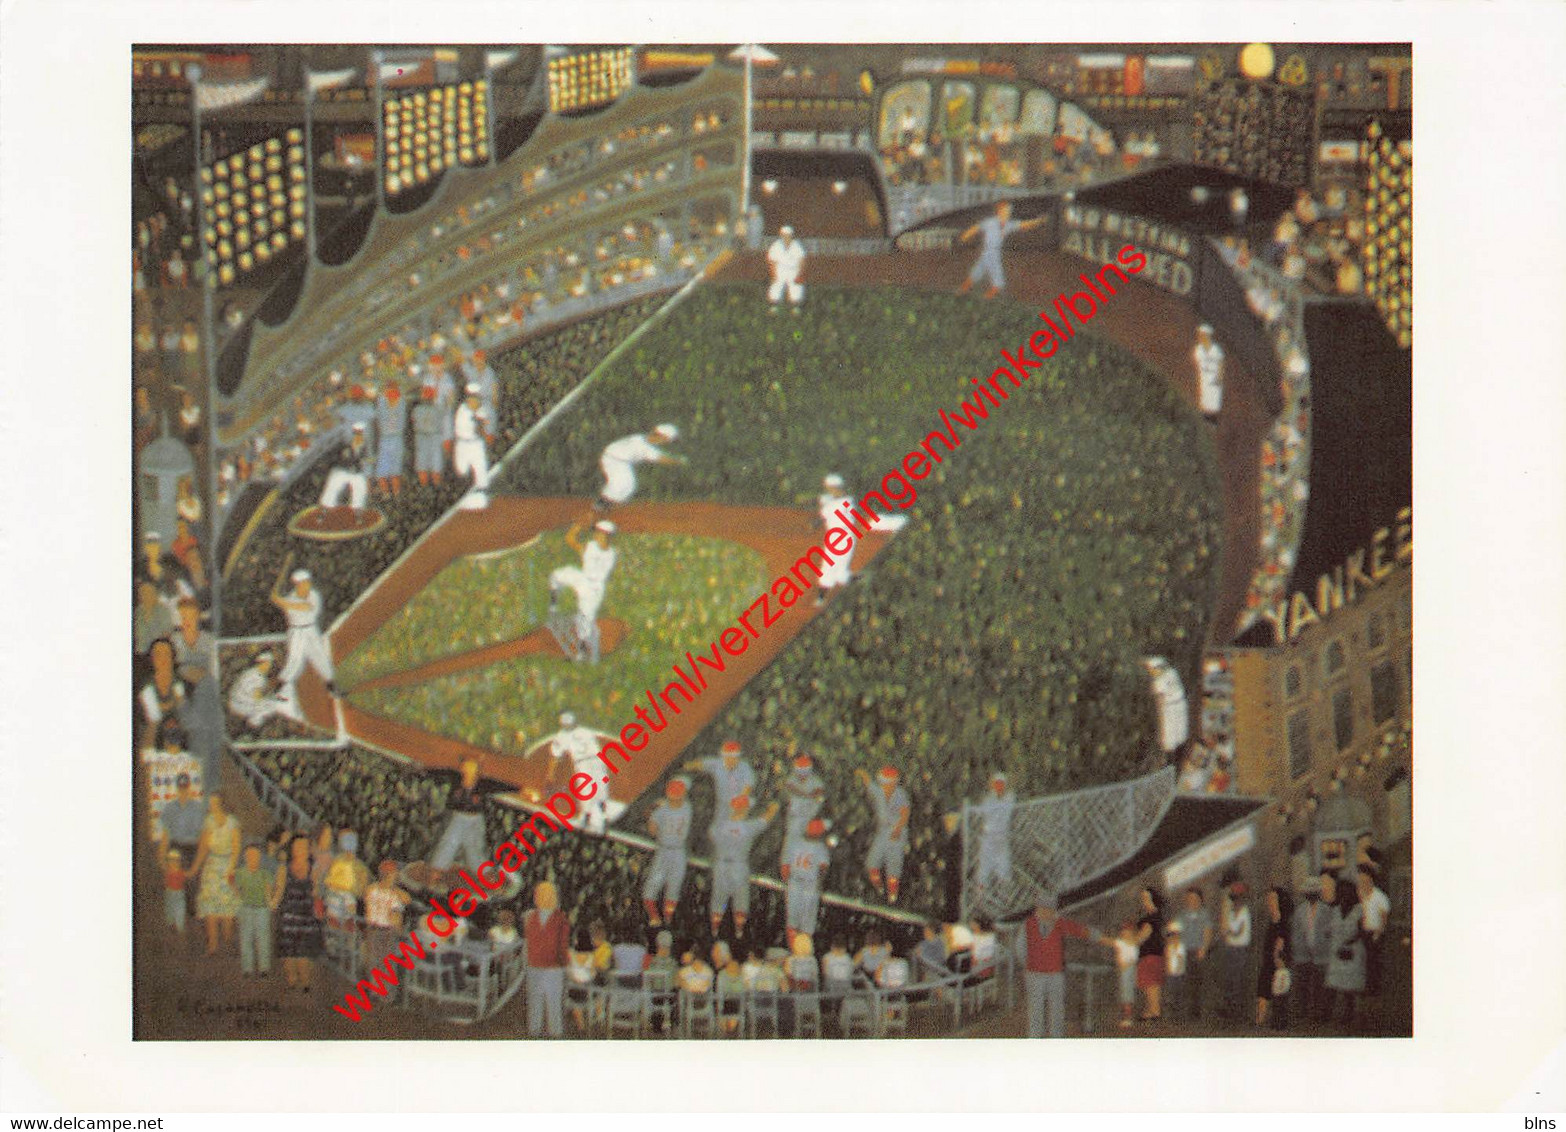 Night Game Ball Park - 1967 - Ralph Fasanella - Baseball Art - Honkbal